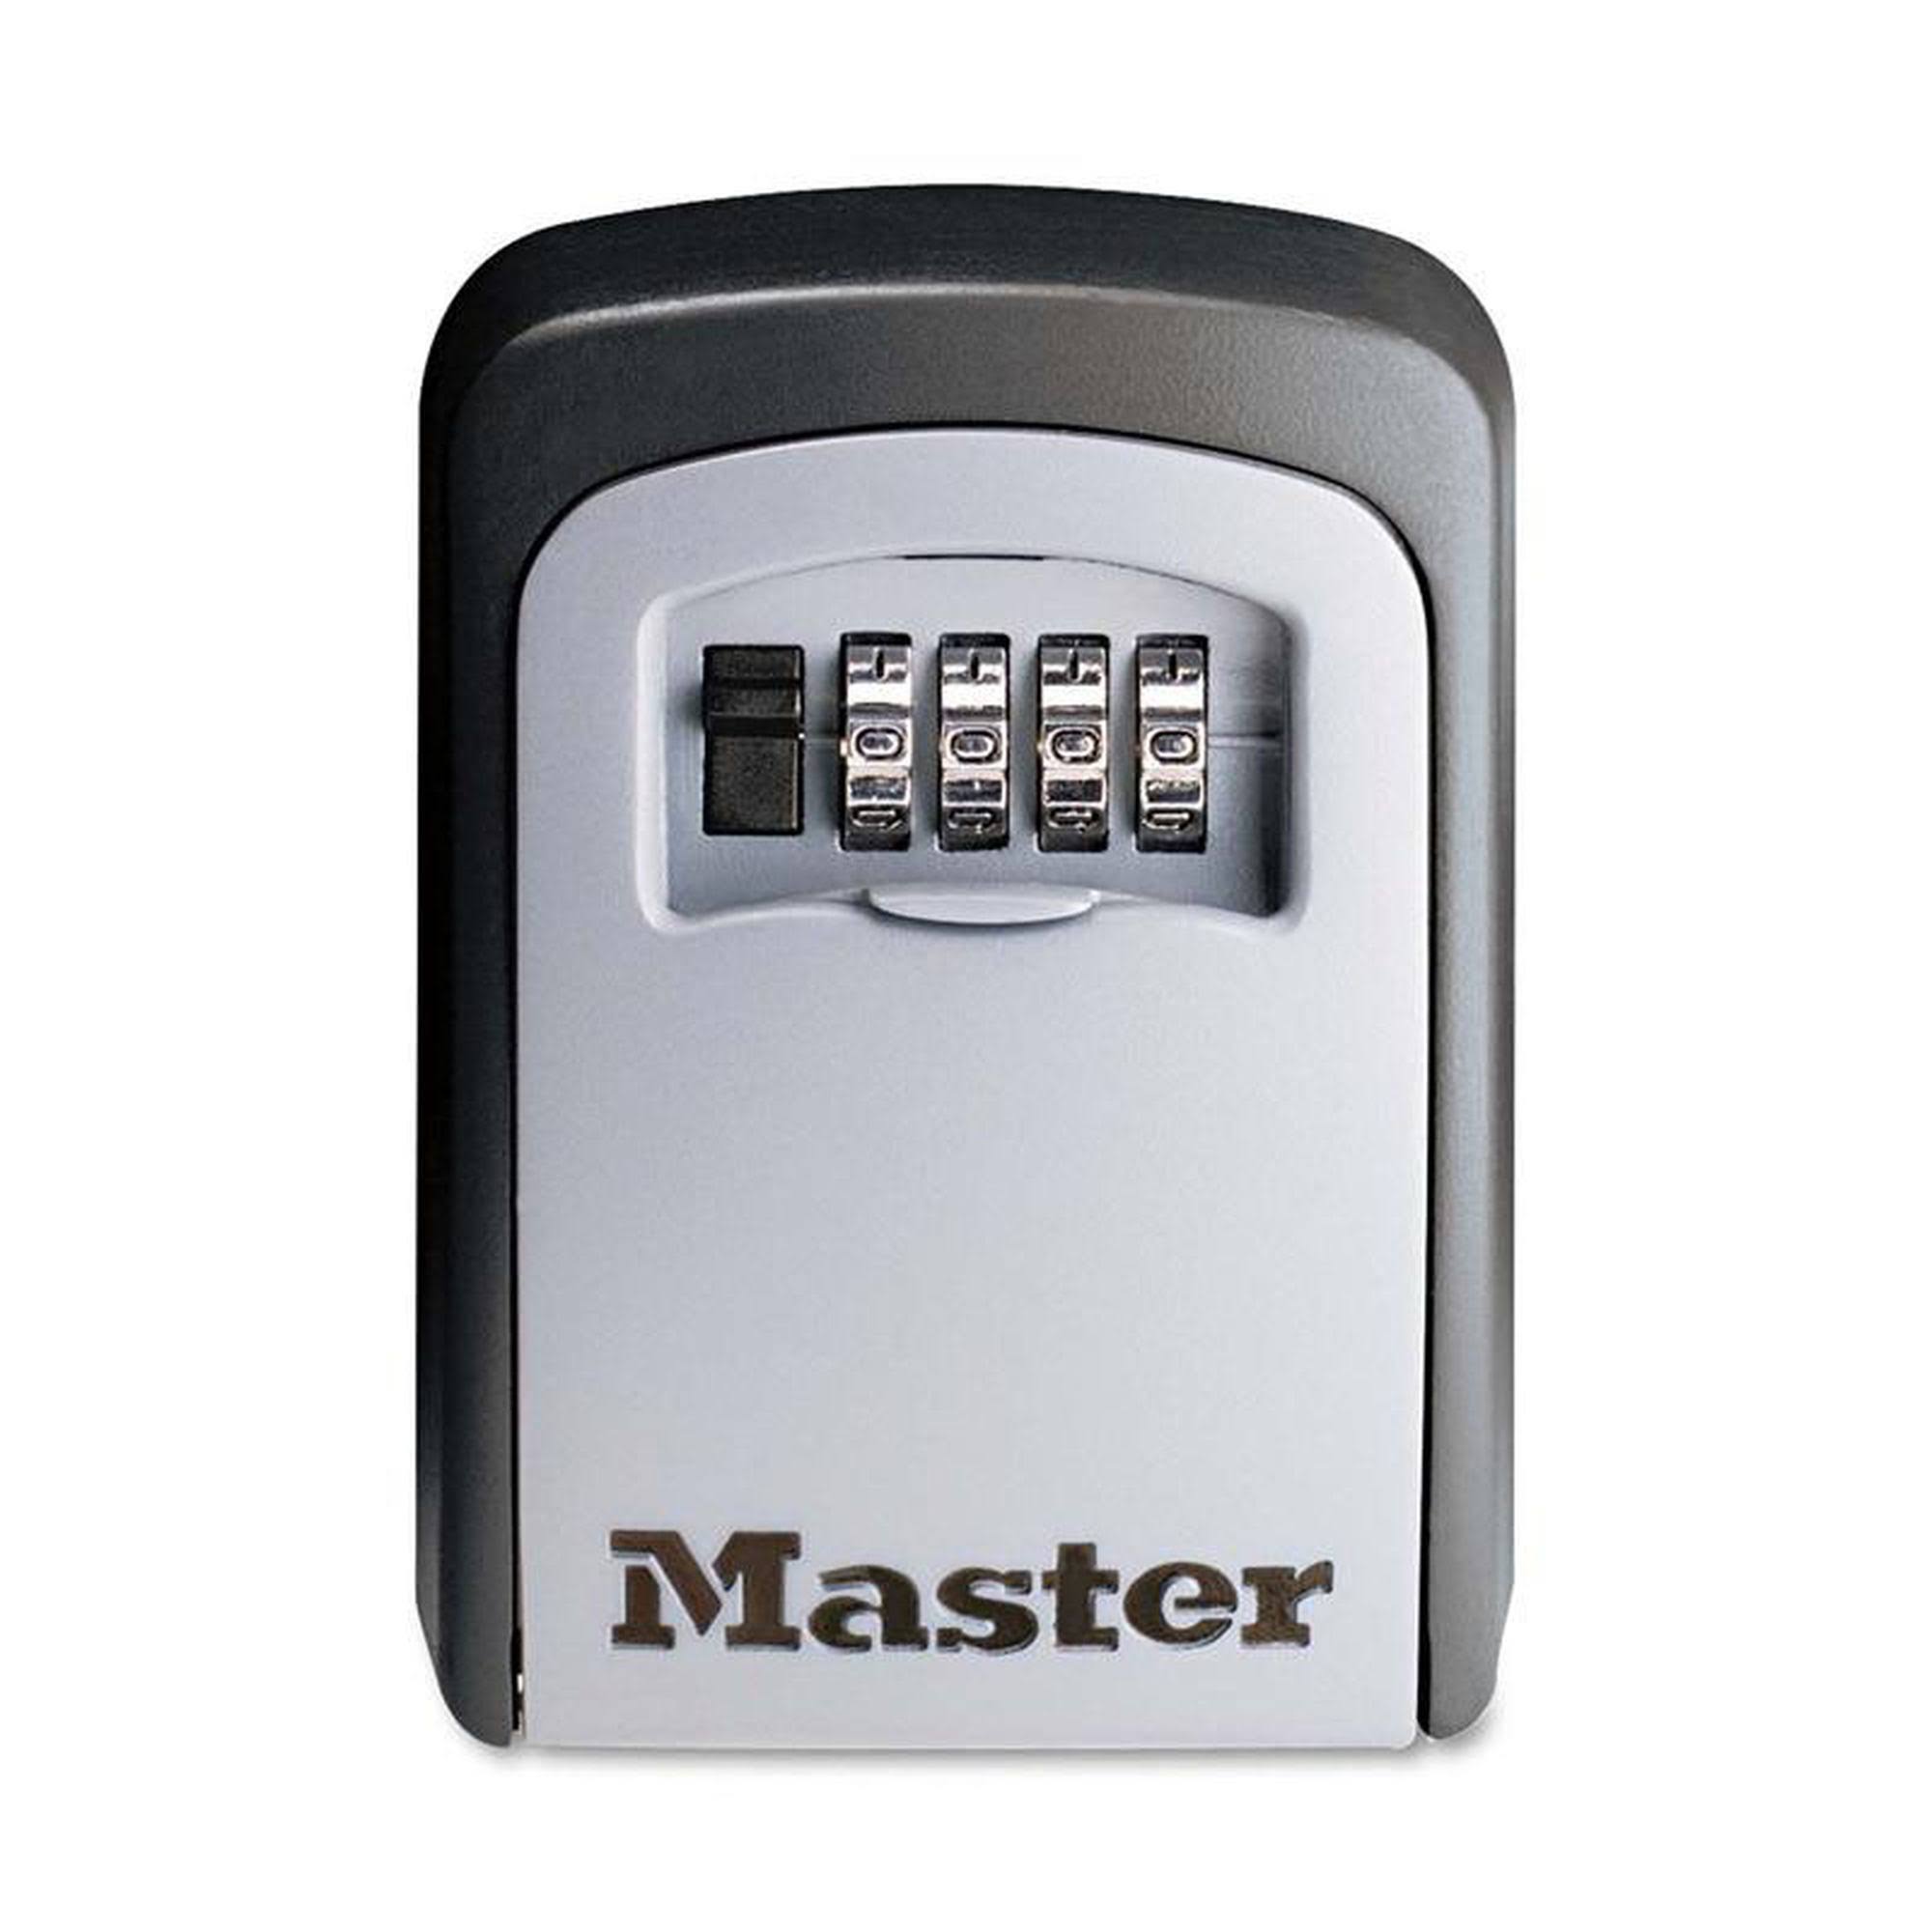 Master Lock Wall Mount Key Storage Security Lock